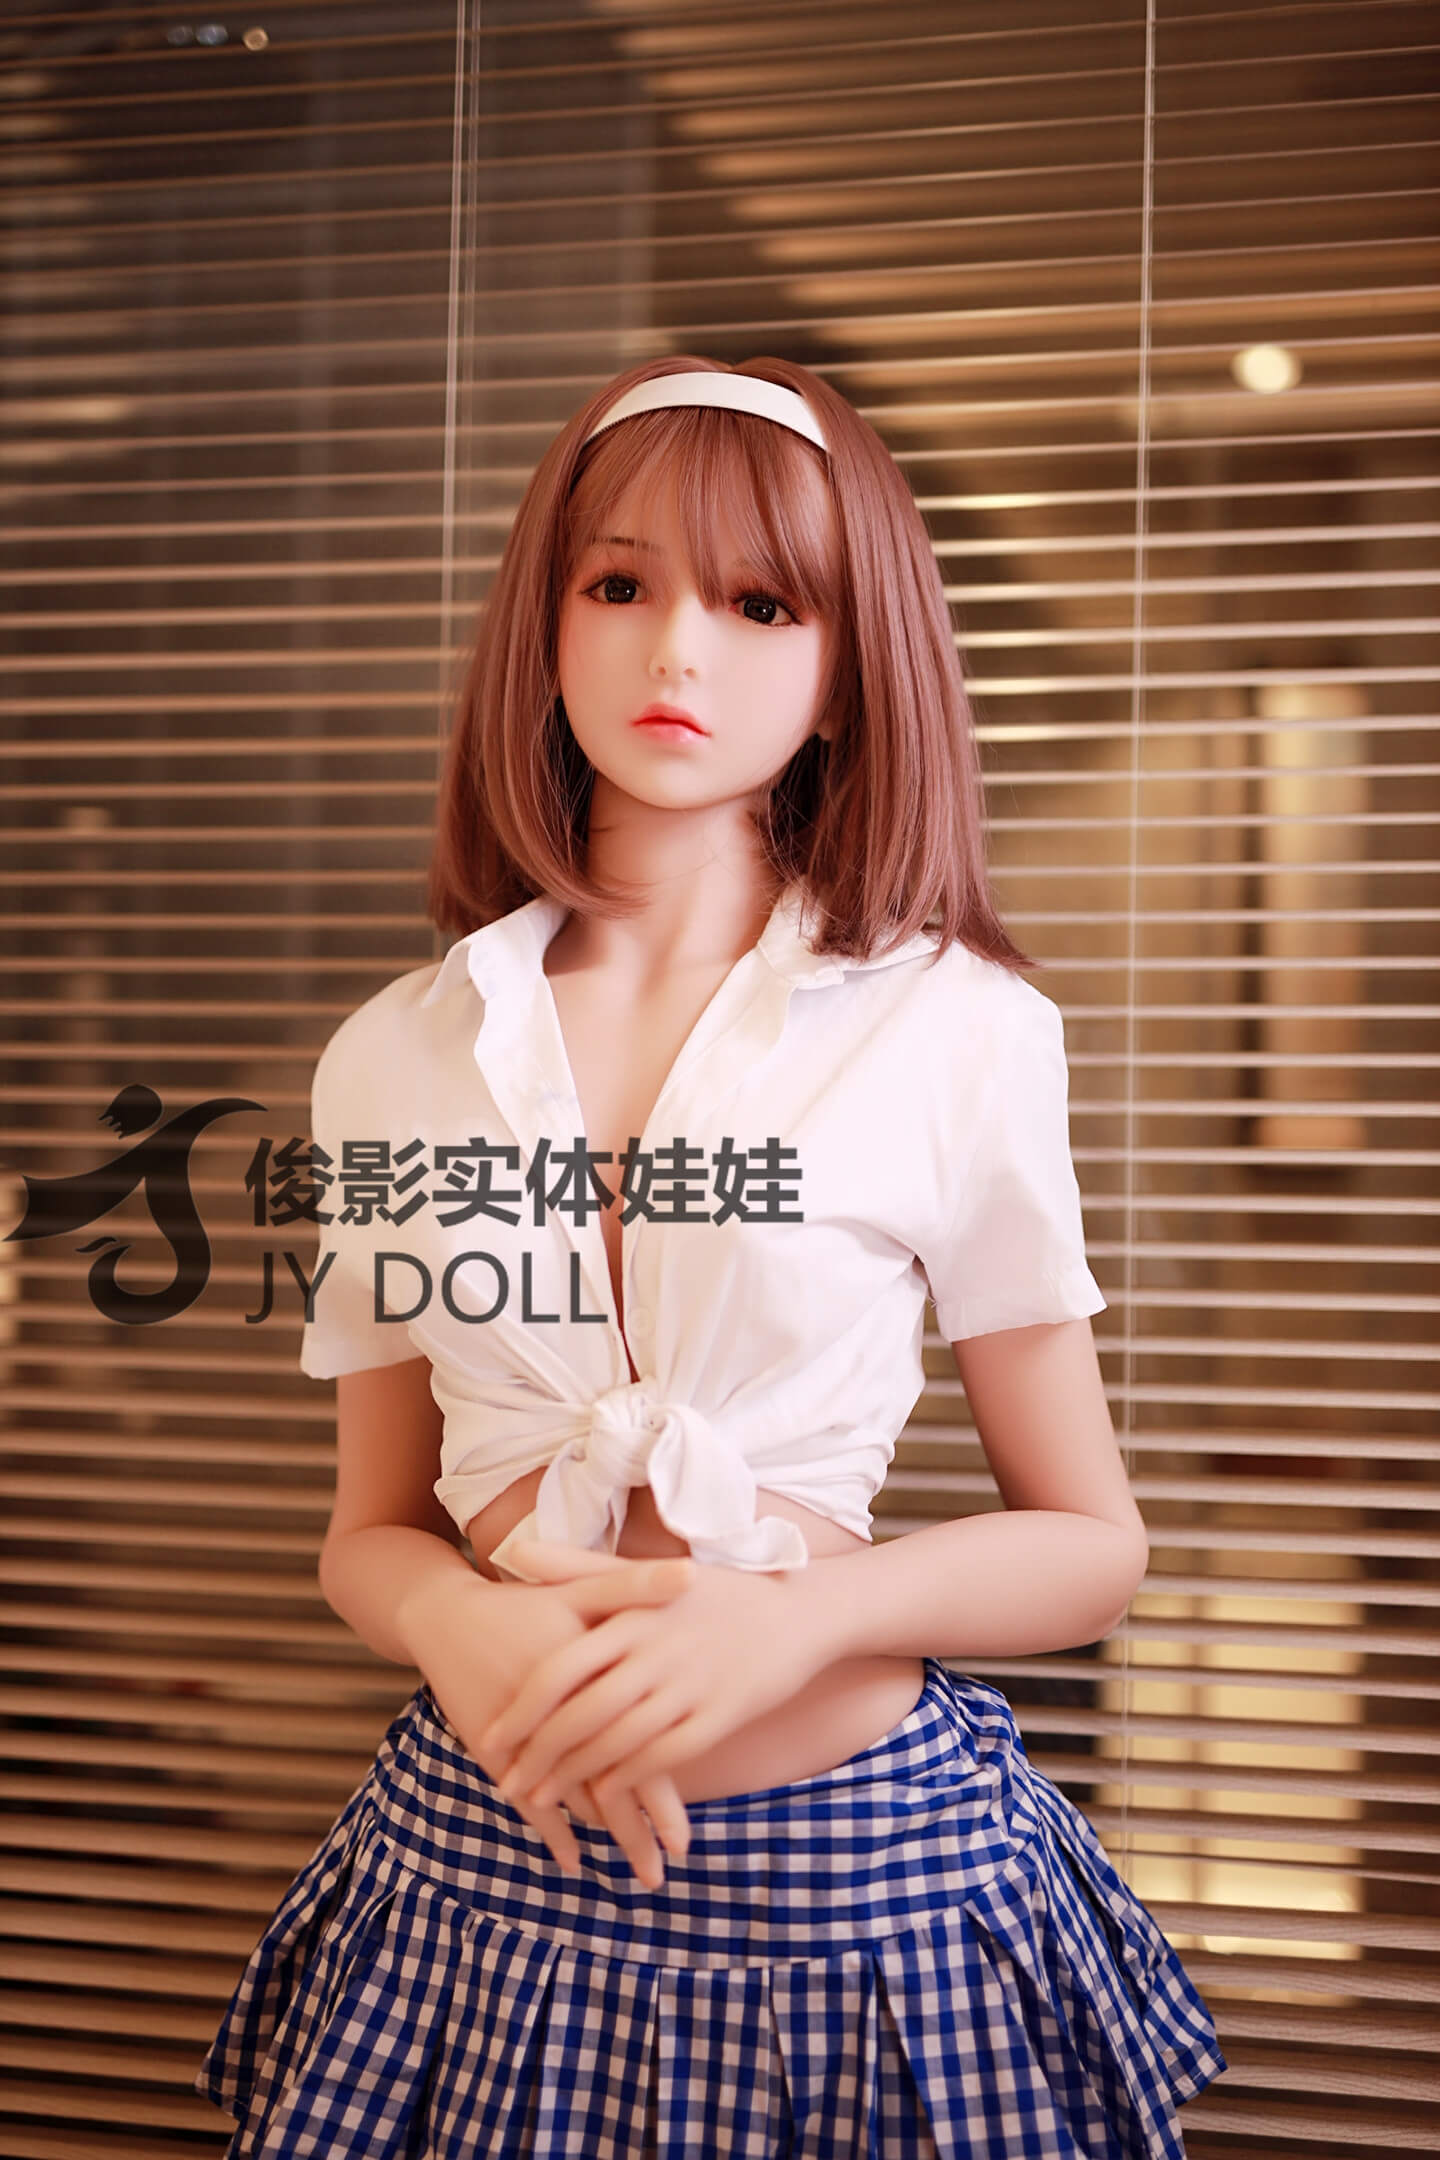 JY Doll - Realistic Love Doll - 5ft 2in (157cm) - Lily - Love Dolls 4U